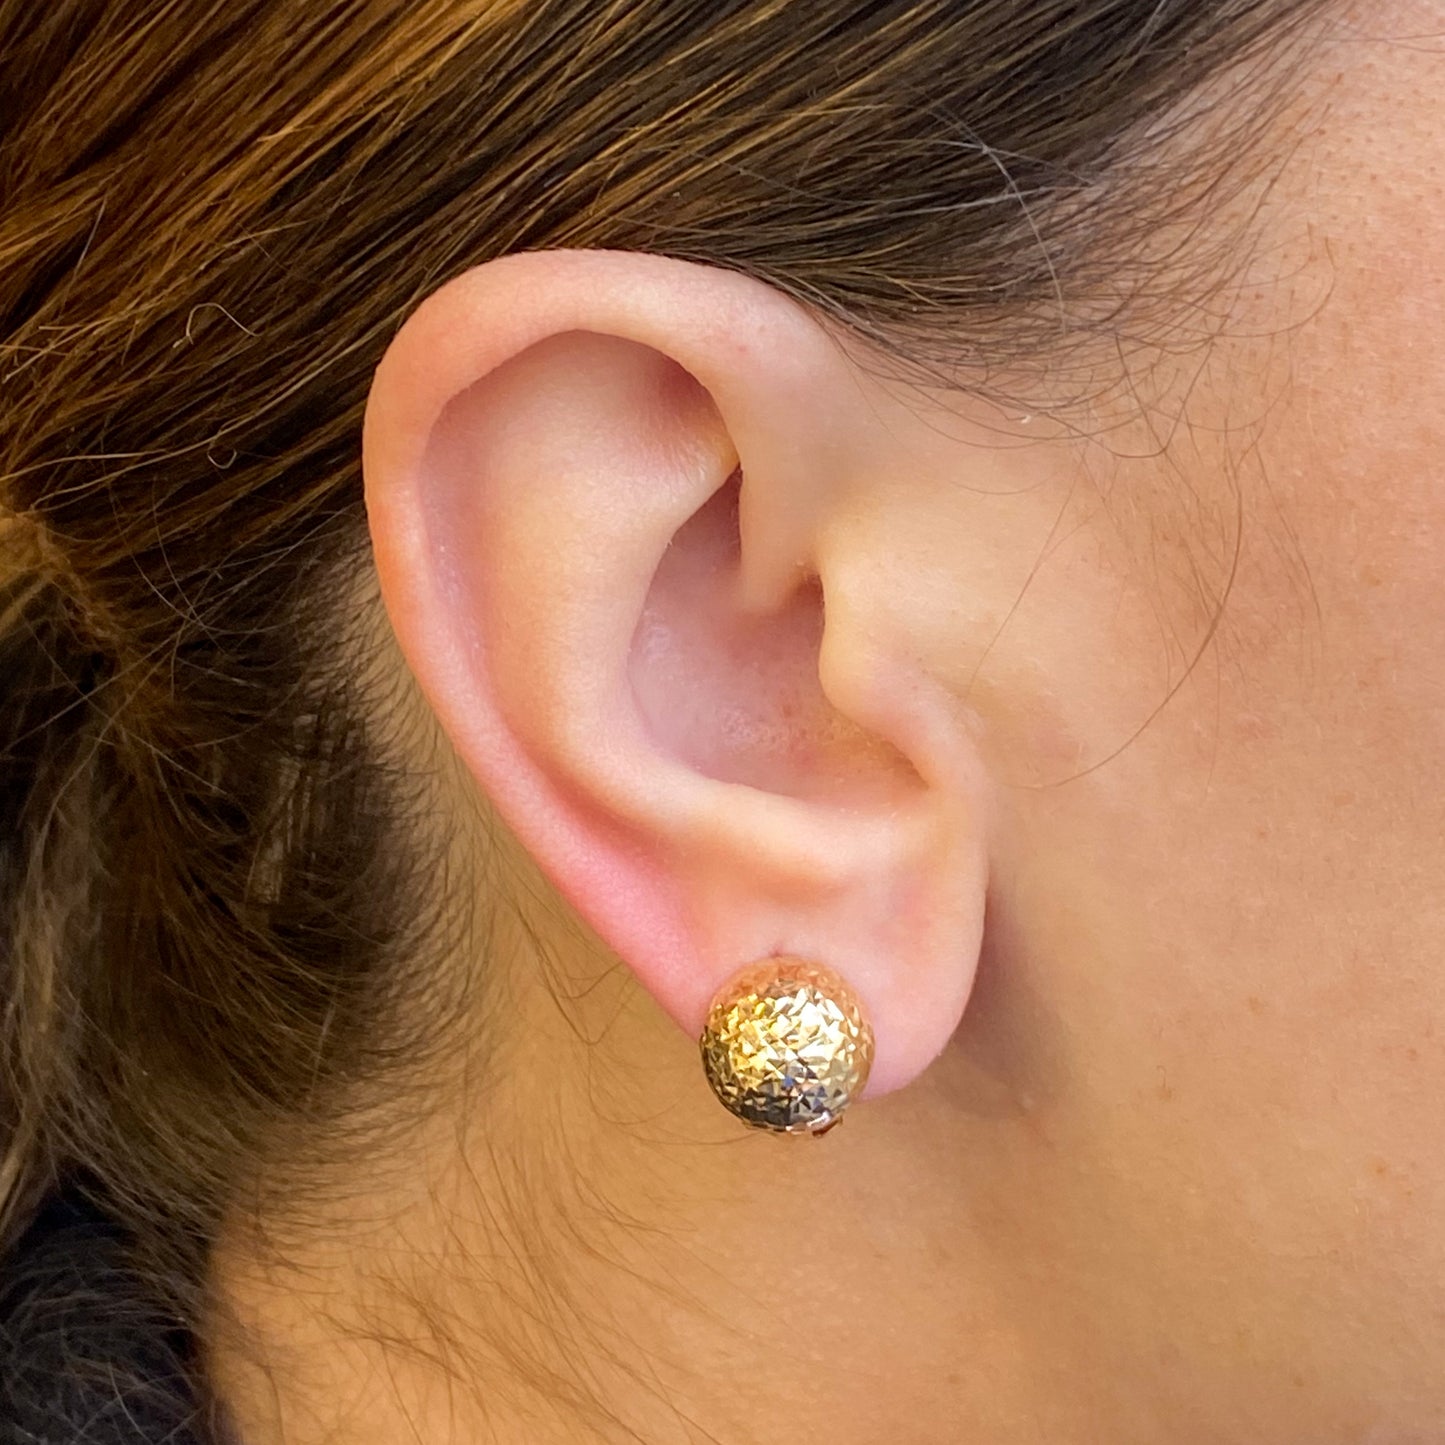 9ct Gold Puffed Diamond Cut Round Stud & Clip Earrings - John Ross Jewellers